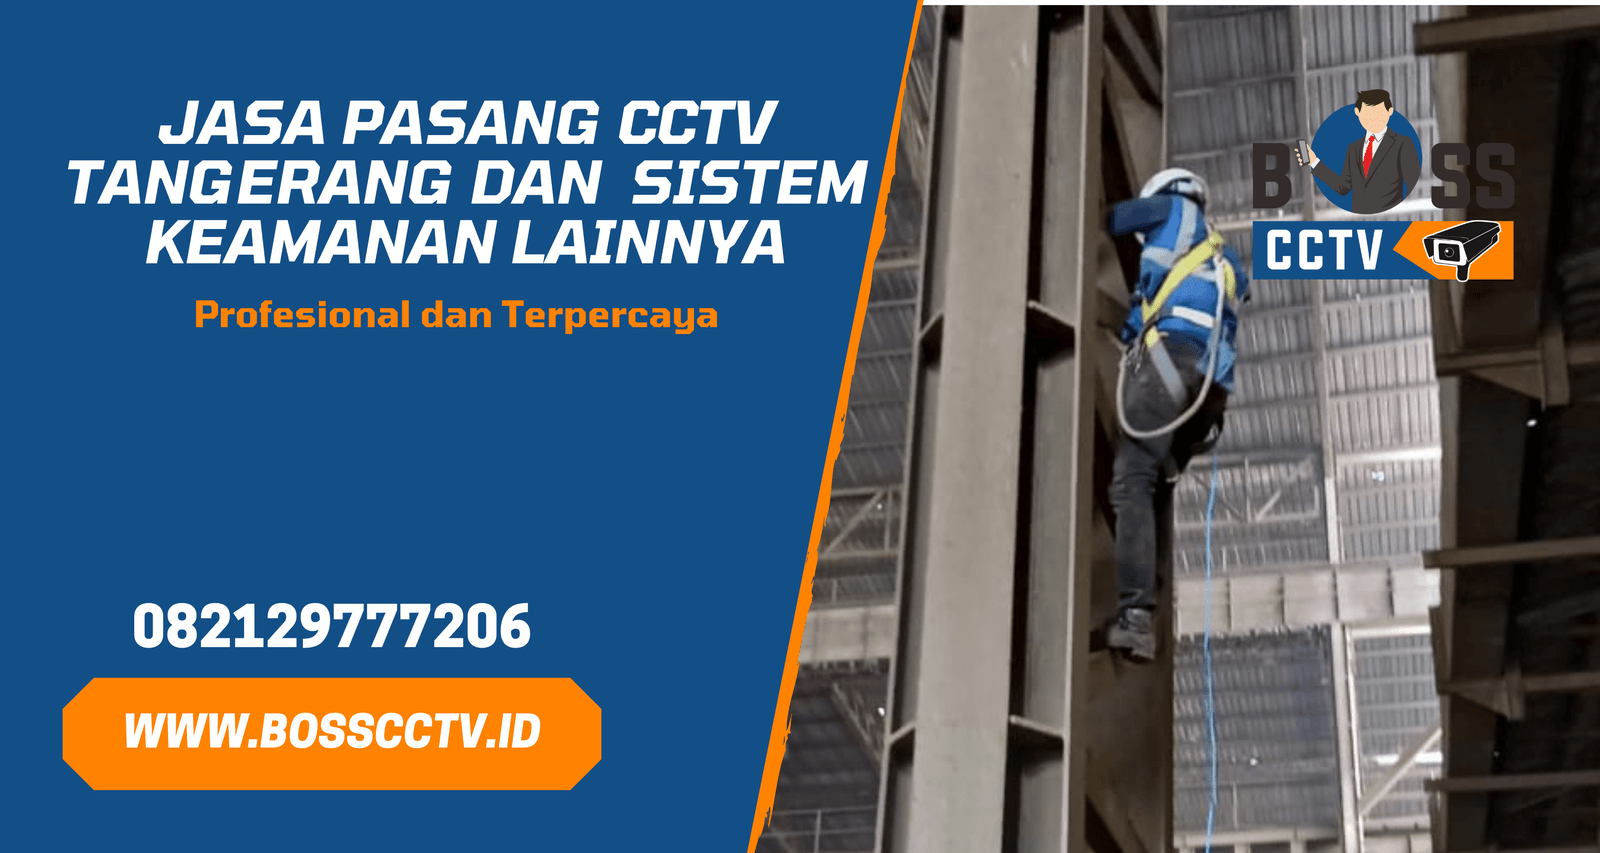 Kami melayani jasa Pasang dan Perbaikan CCTV Mauk Tangerang dengan harga yang bersaing dan Free Instalasi.